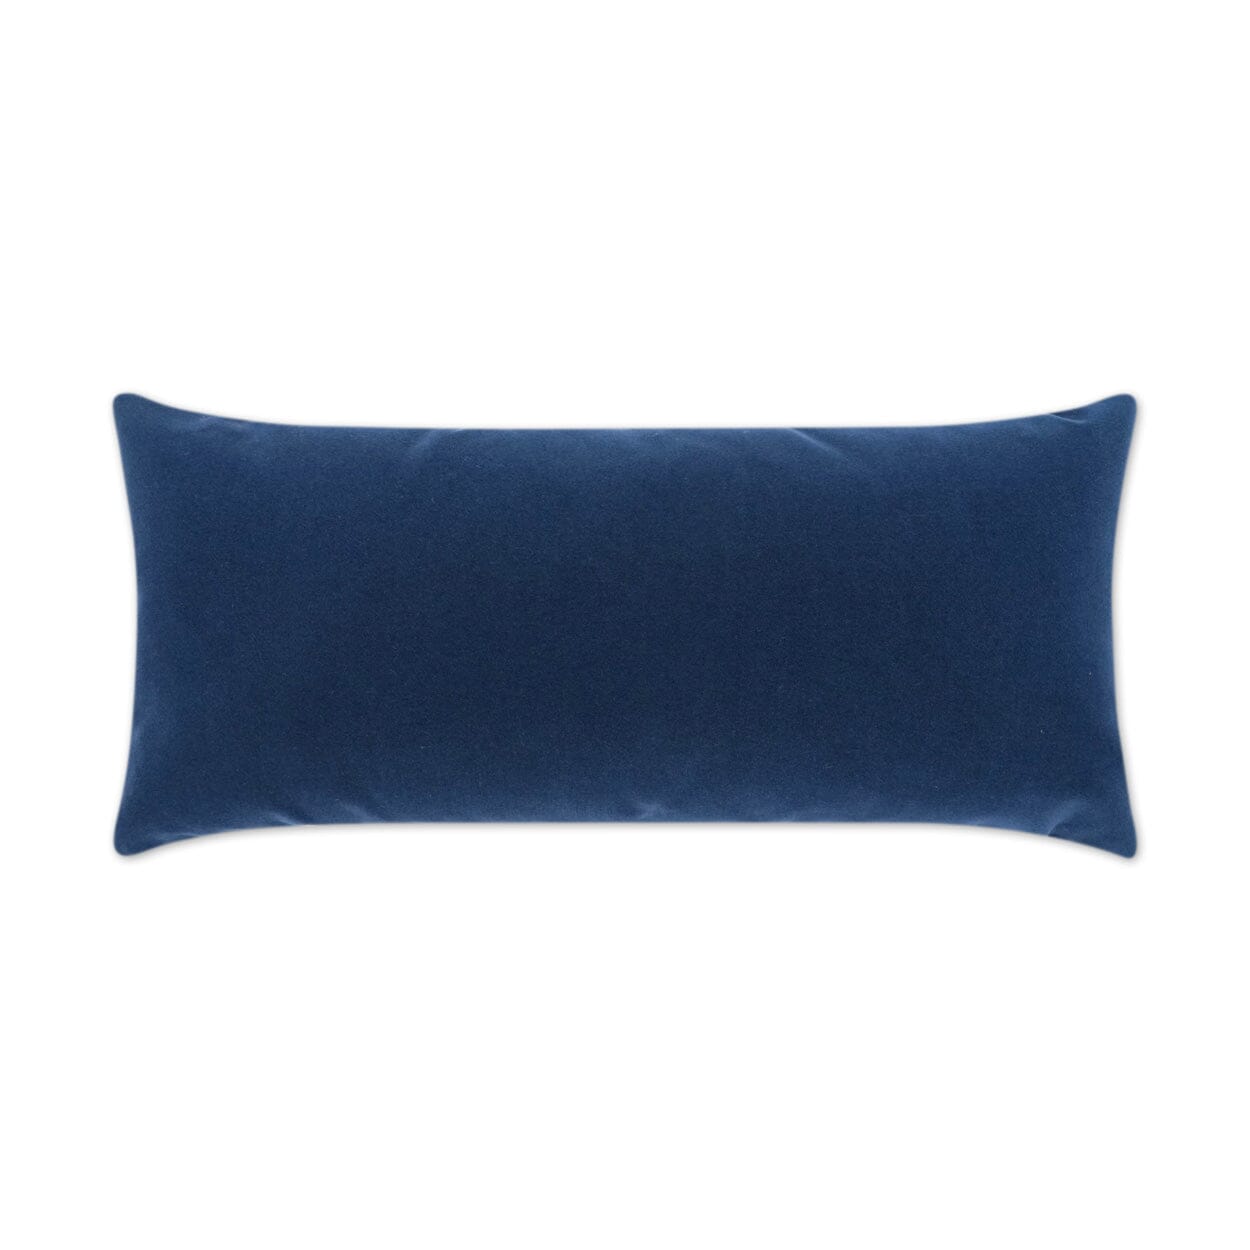 D.V. Kap 12" x 24" Outdoor Lumbar Pillow | Sundance Navy Lumbar Pillows D.V Kap Outdoor